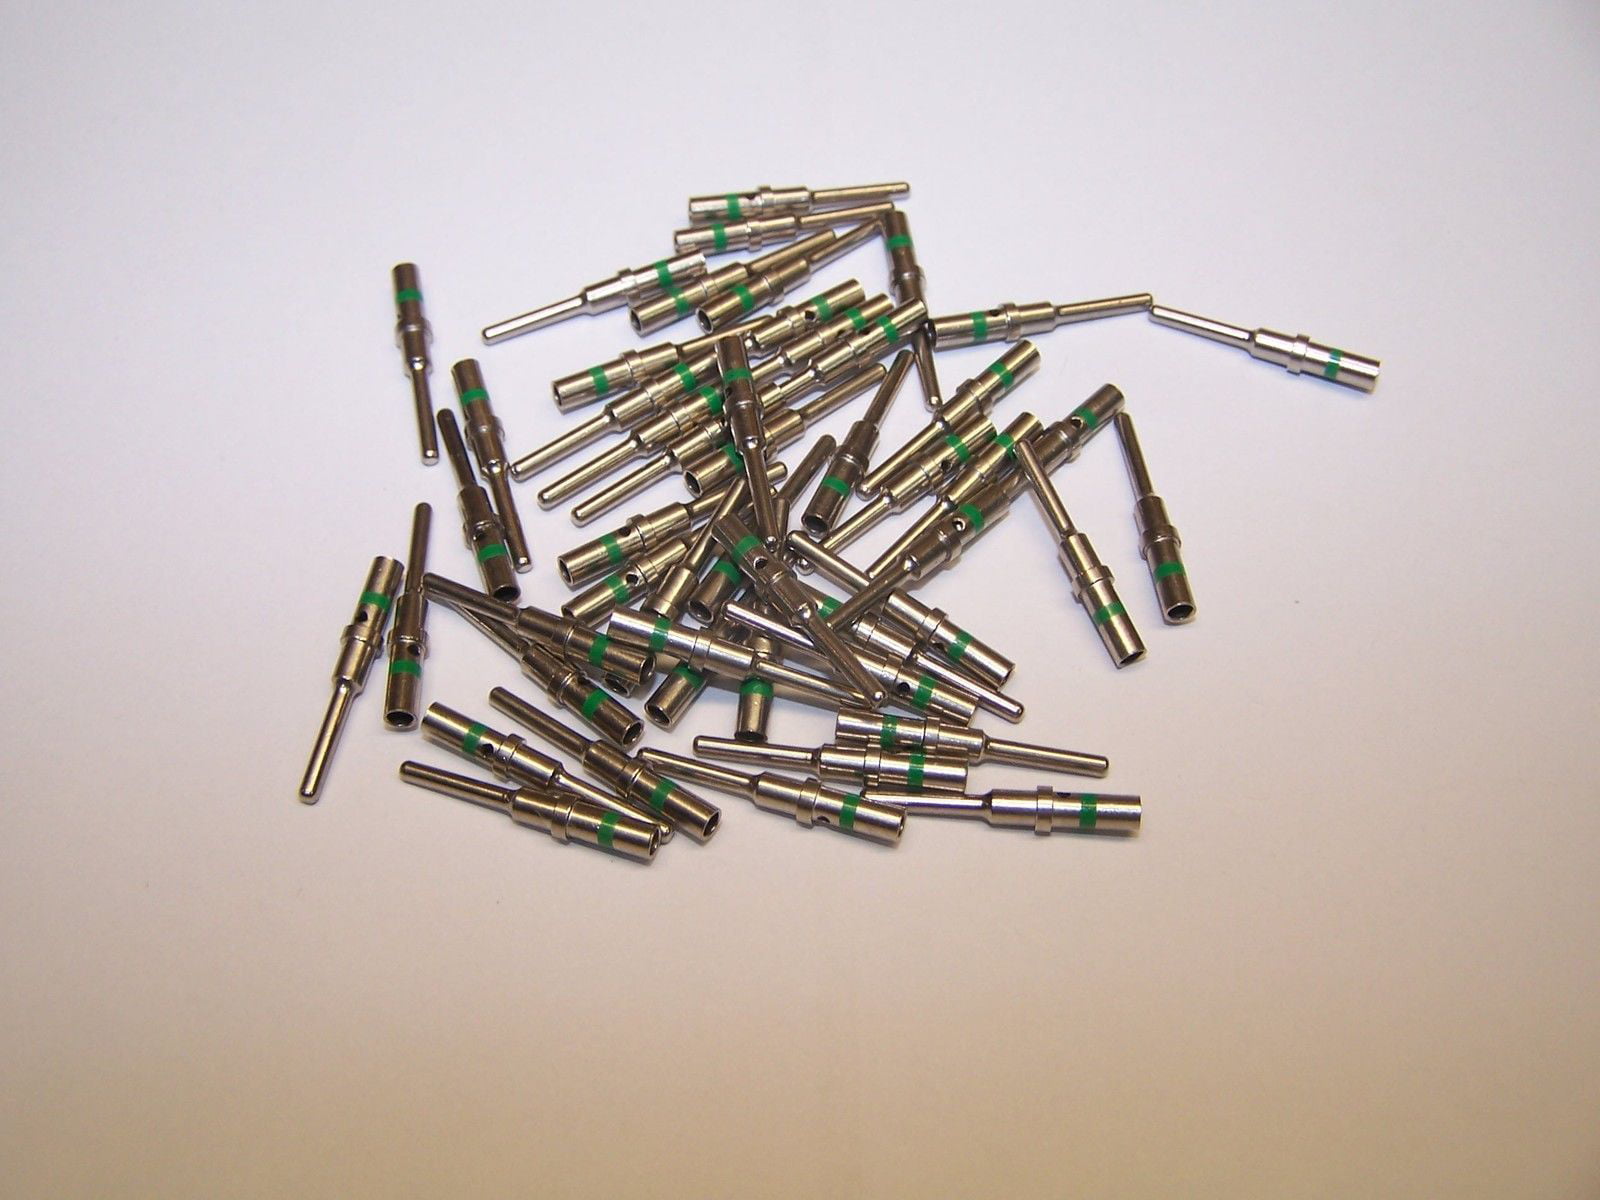 100 Deutsch DT #16 Solid Contact Terminals male pins for 16-18-20 gauge wire